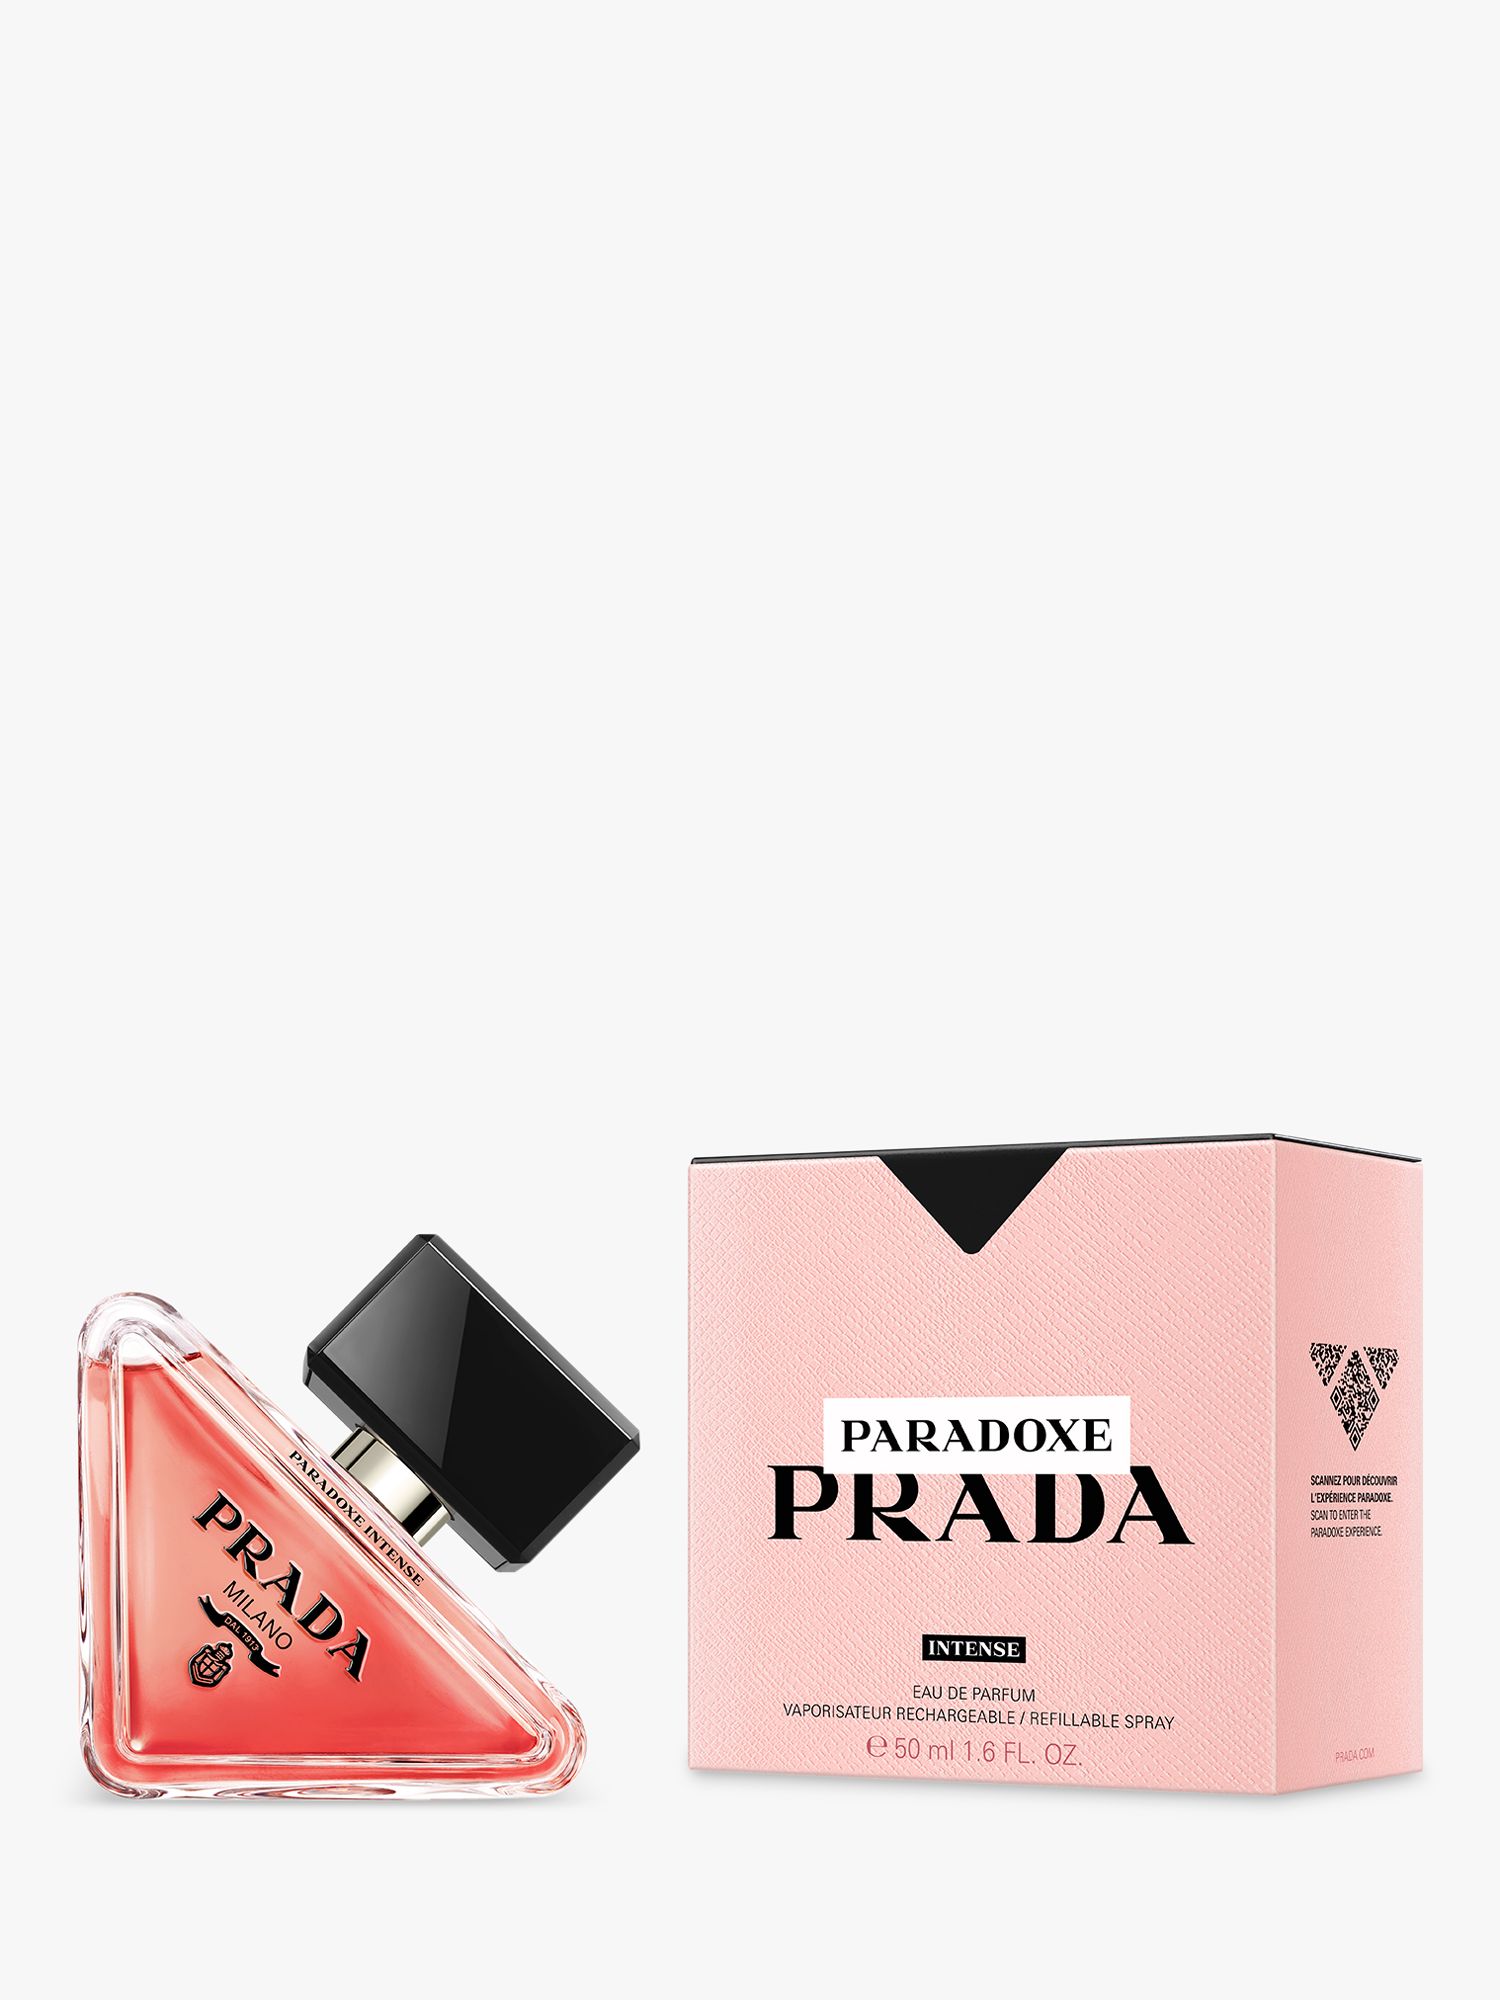 Prada Paradoxe Intense Eau de Parfum, 50 ml